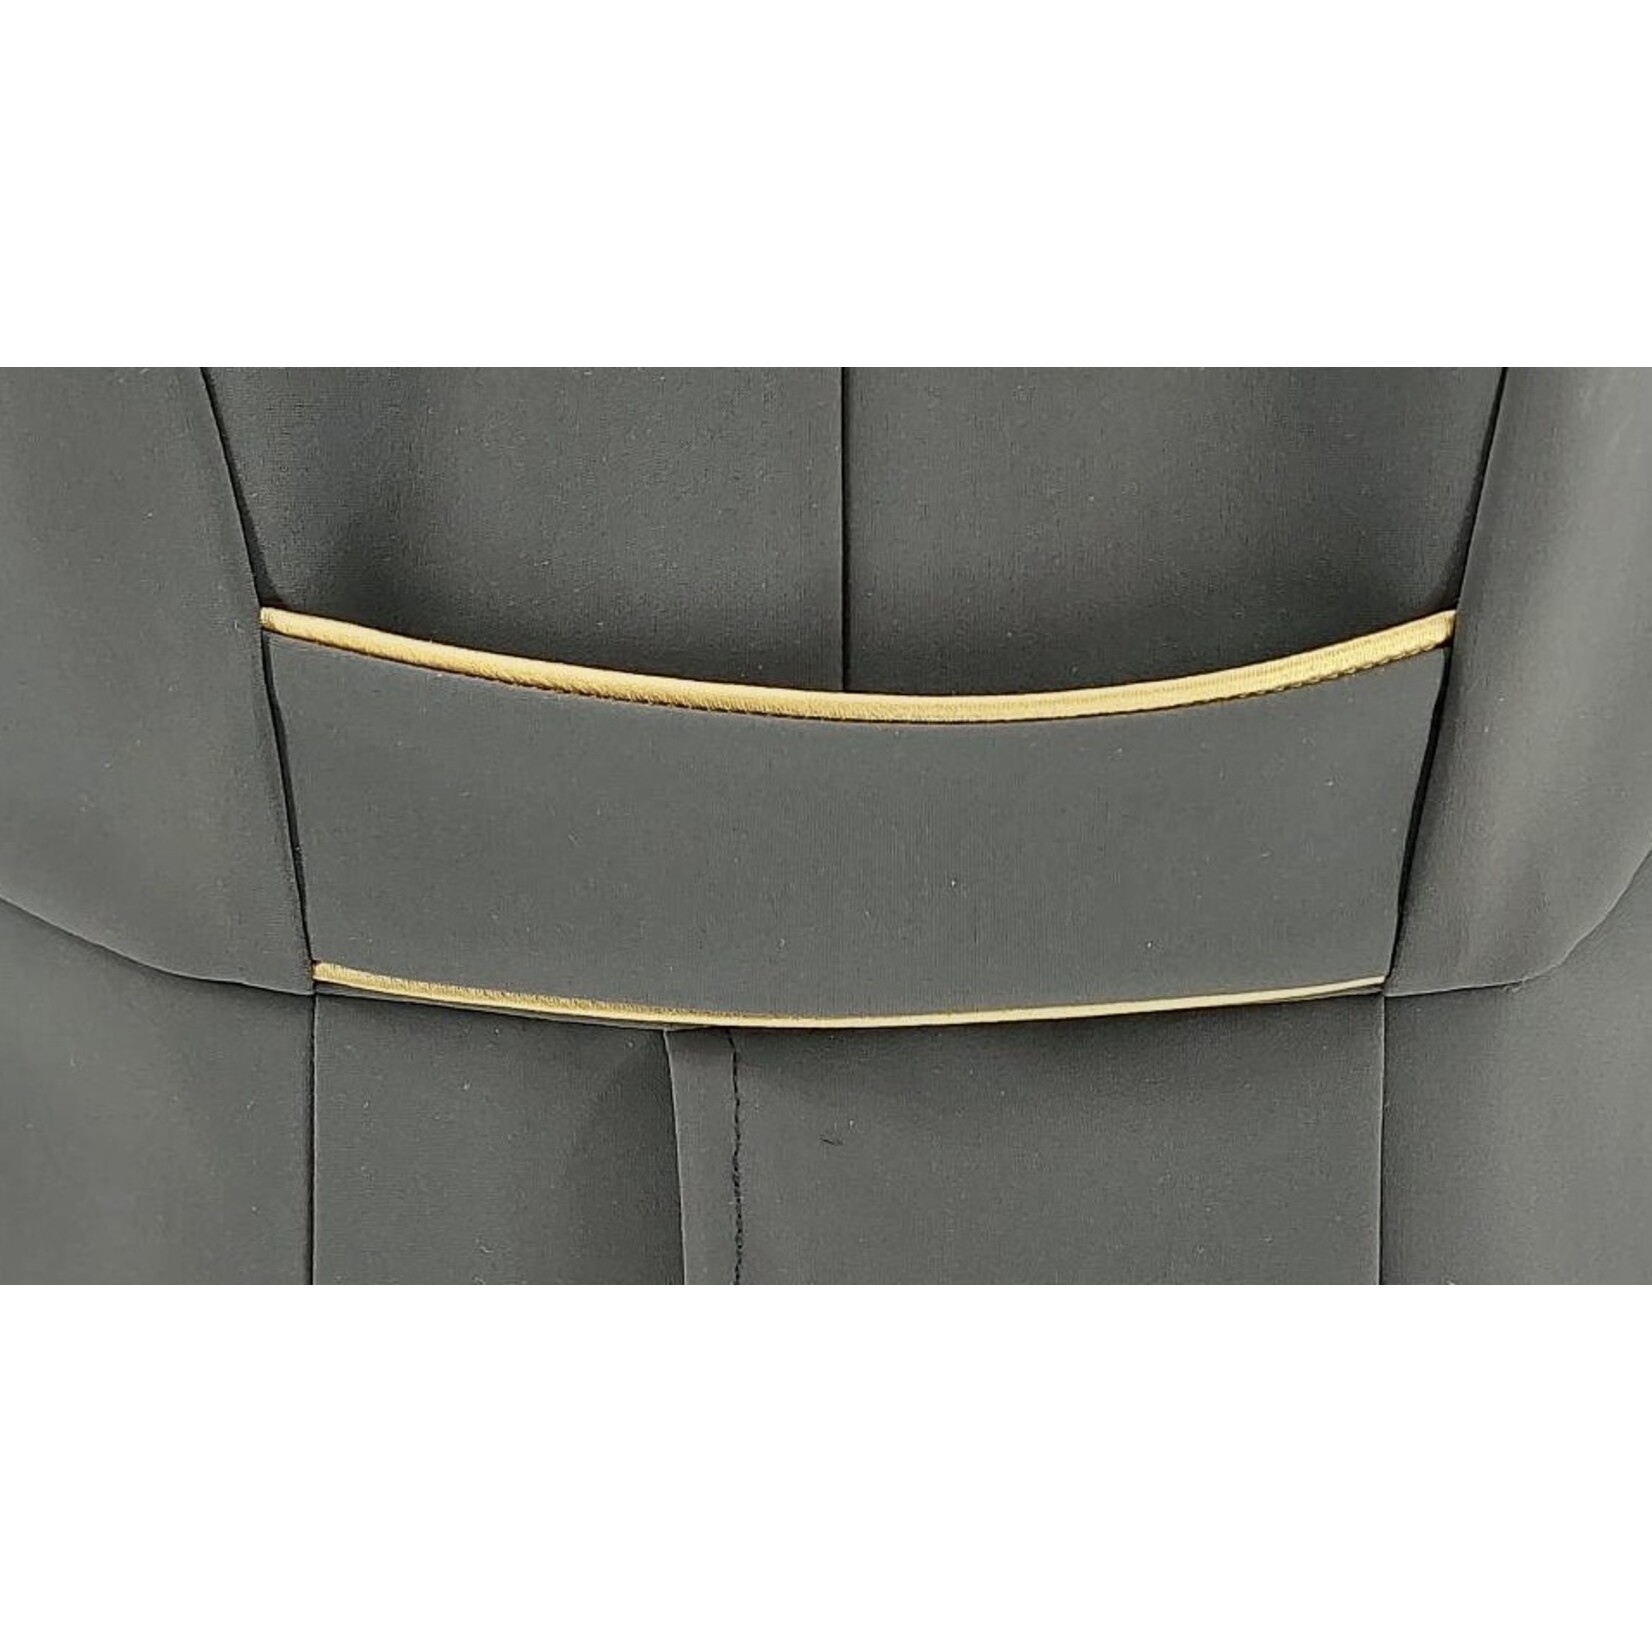 Lamantia Couture Nederland DEMO Lamantia Couture tailcoat brown (size 40)